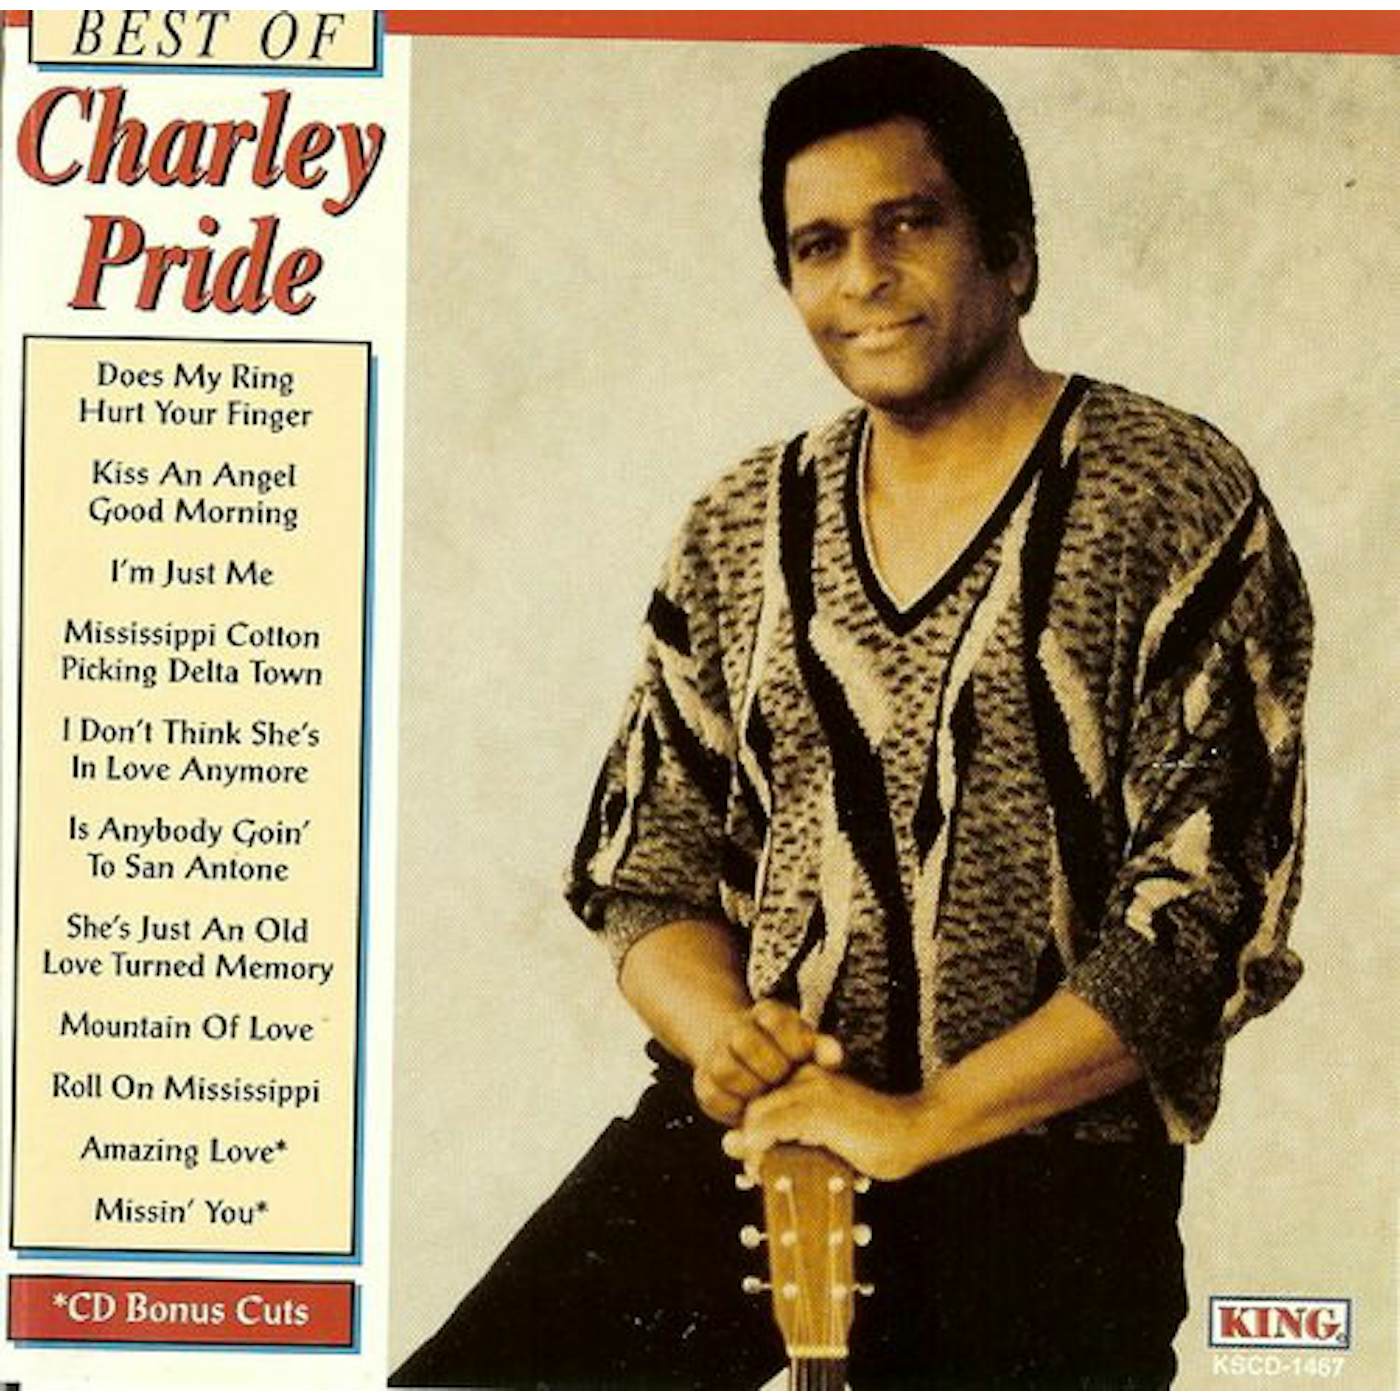 Charley Pride BEST OF Vinyl Record